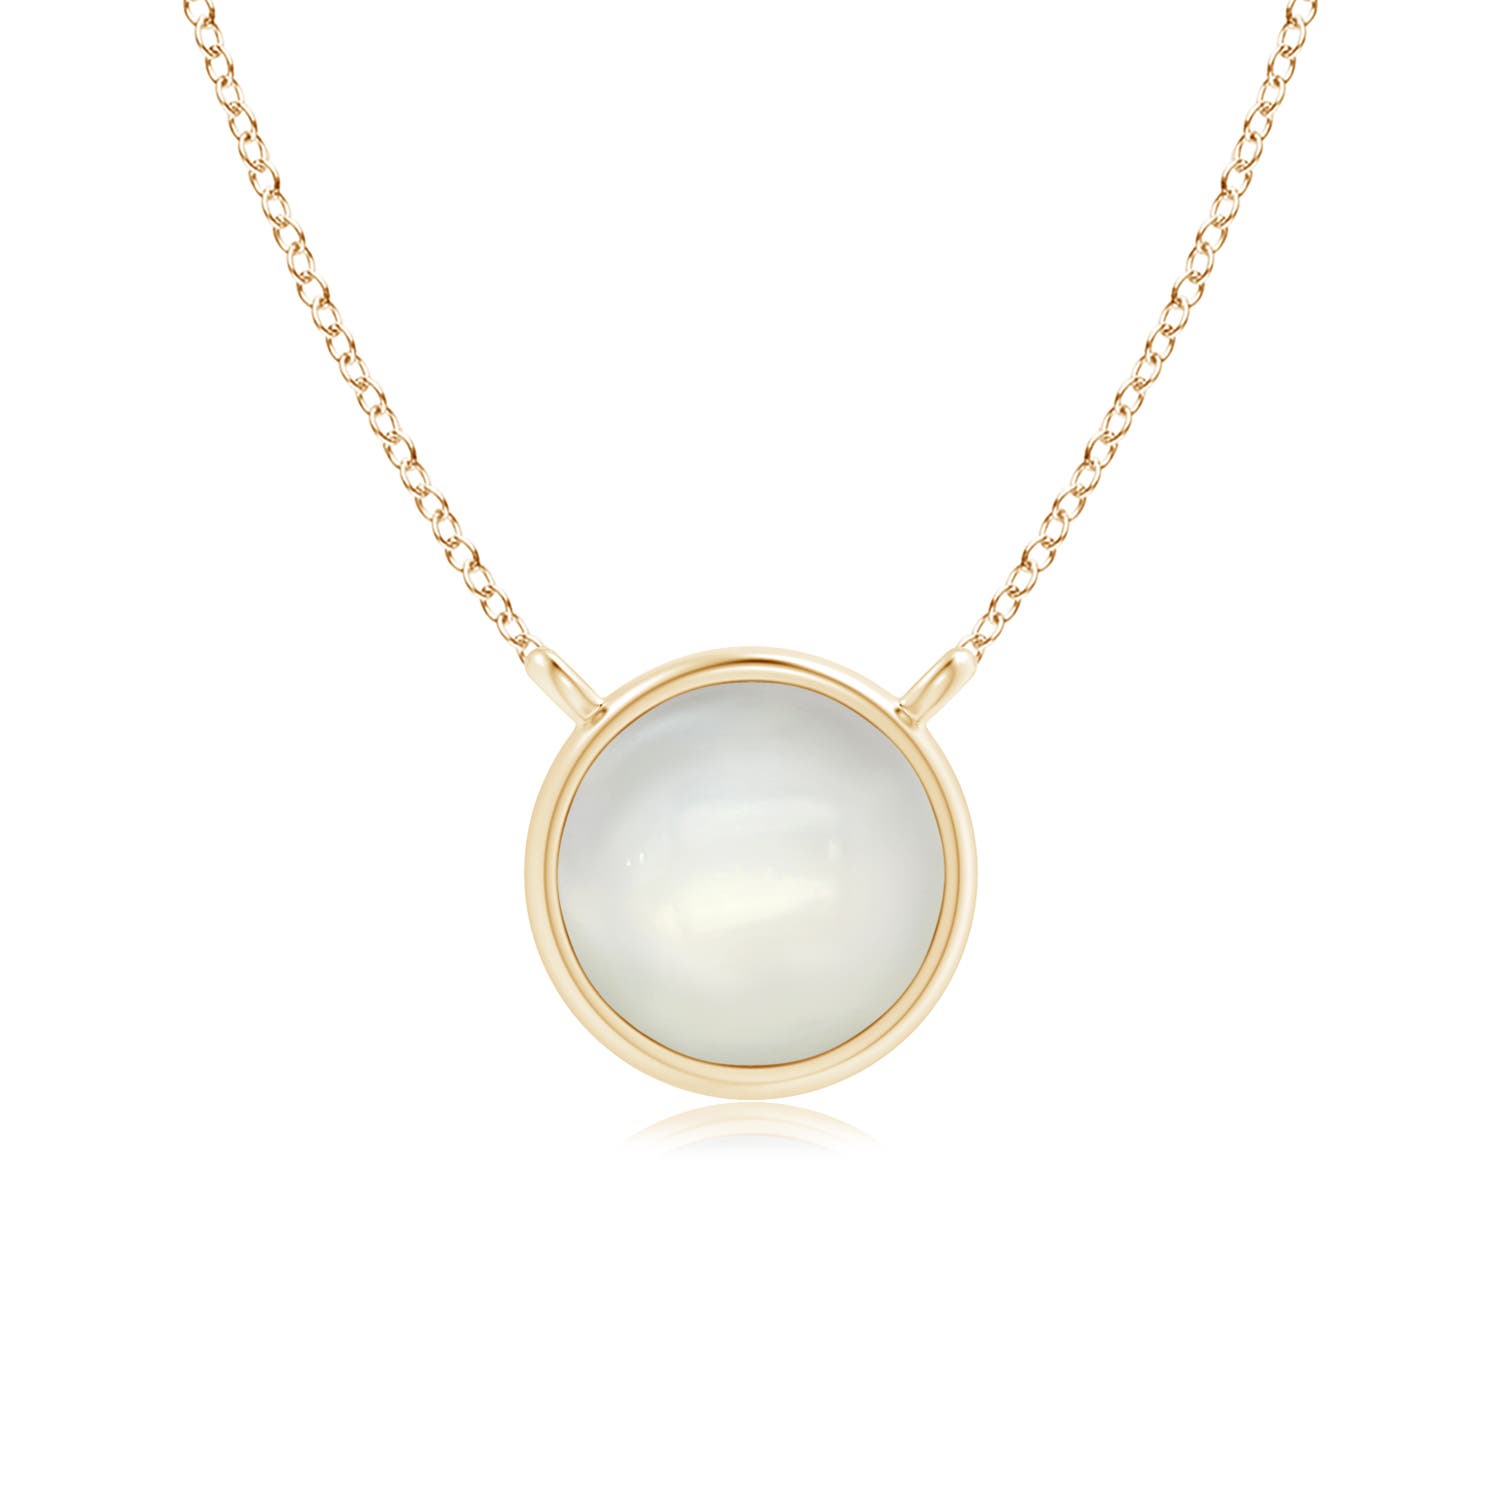 Shop Moonstone Pendant Necklaces for Women | Angara